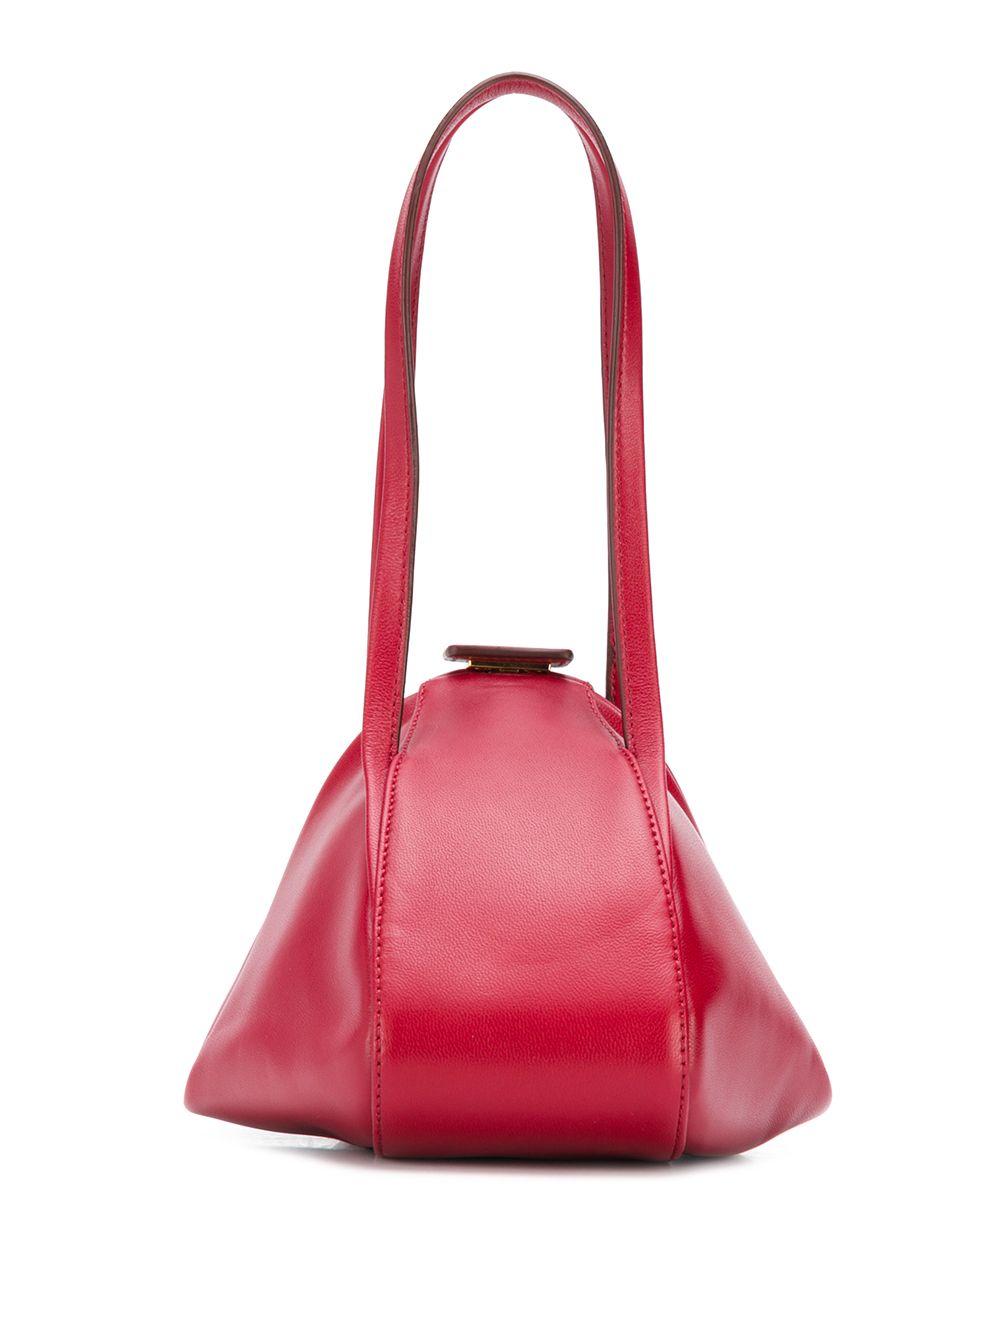 Rodo Leather Medium Shoulder Bag in Red - Lyst